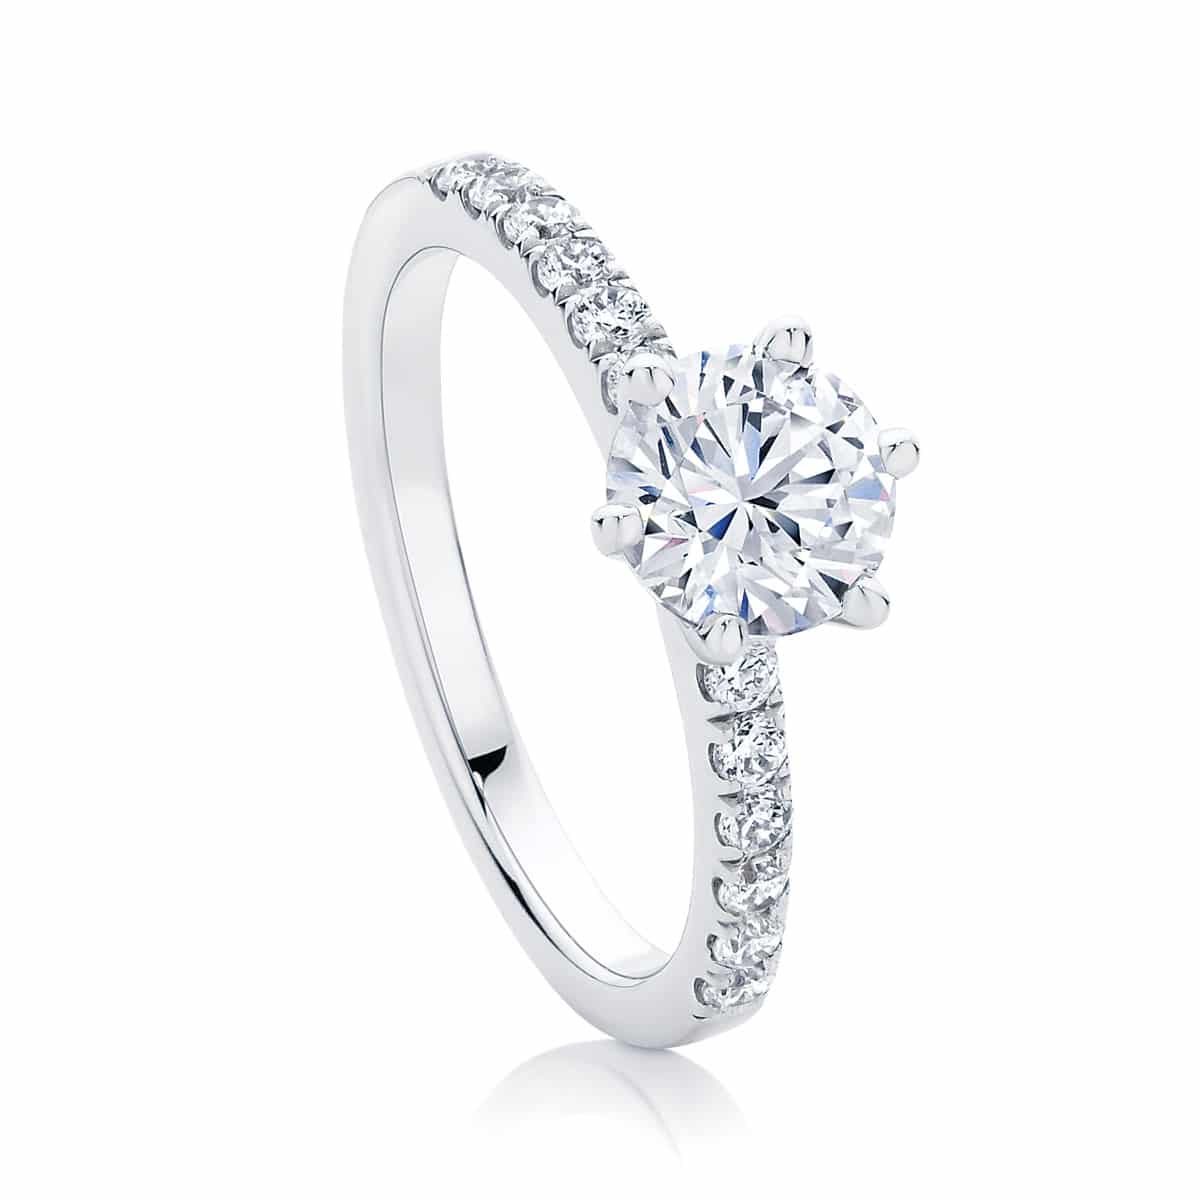 Bespoke sapphire diamond engagement ring | Sydney jewellers